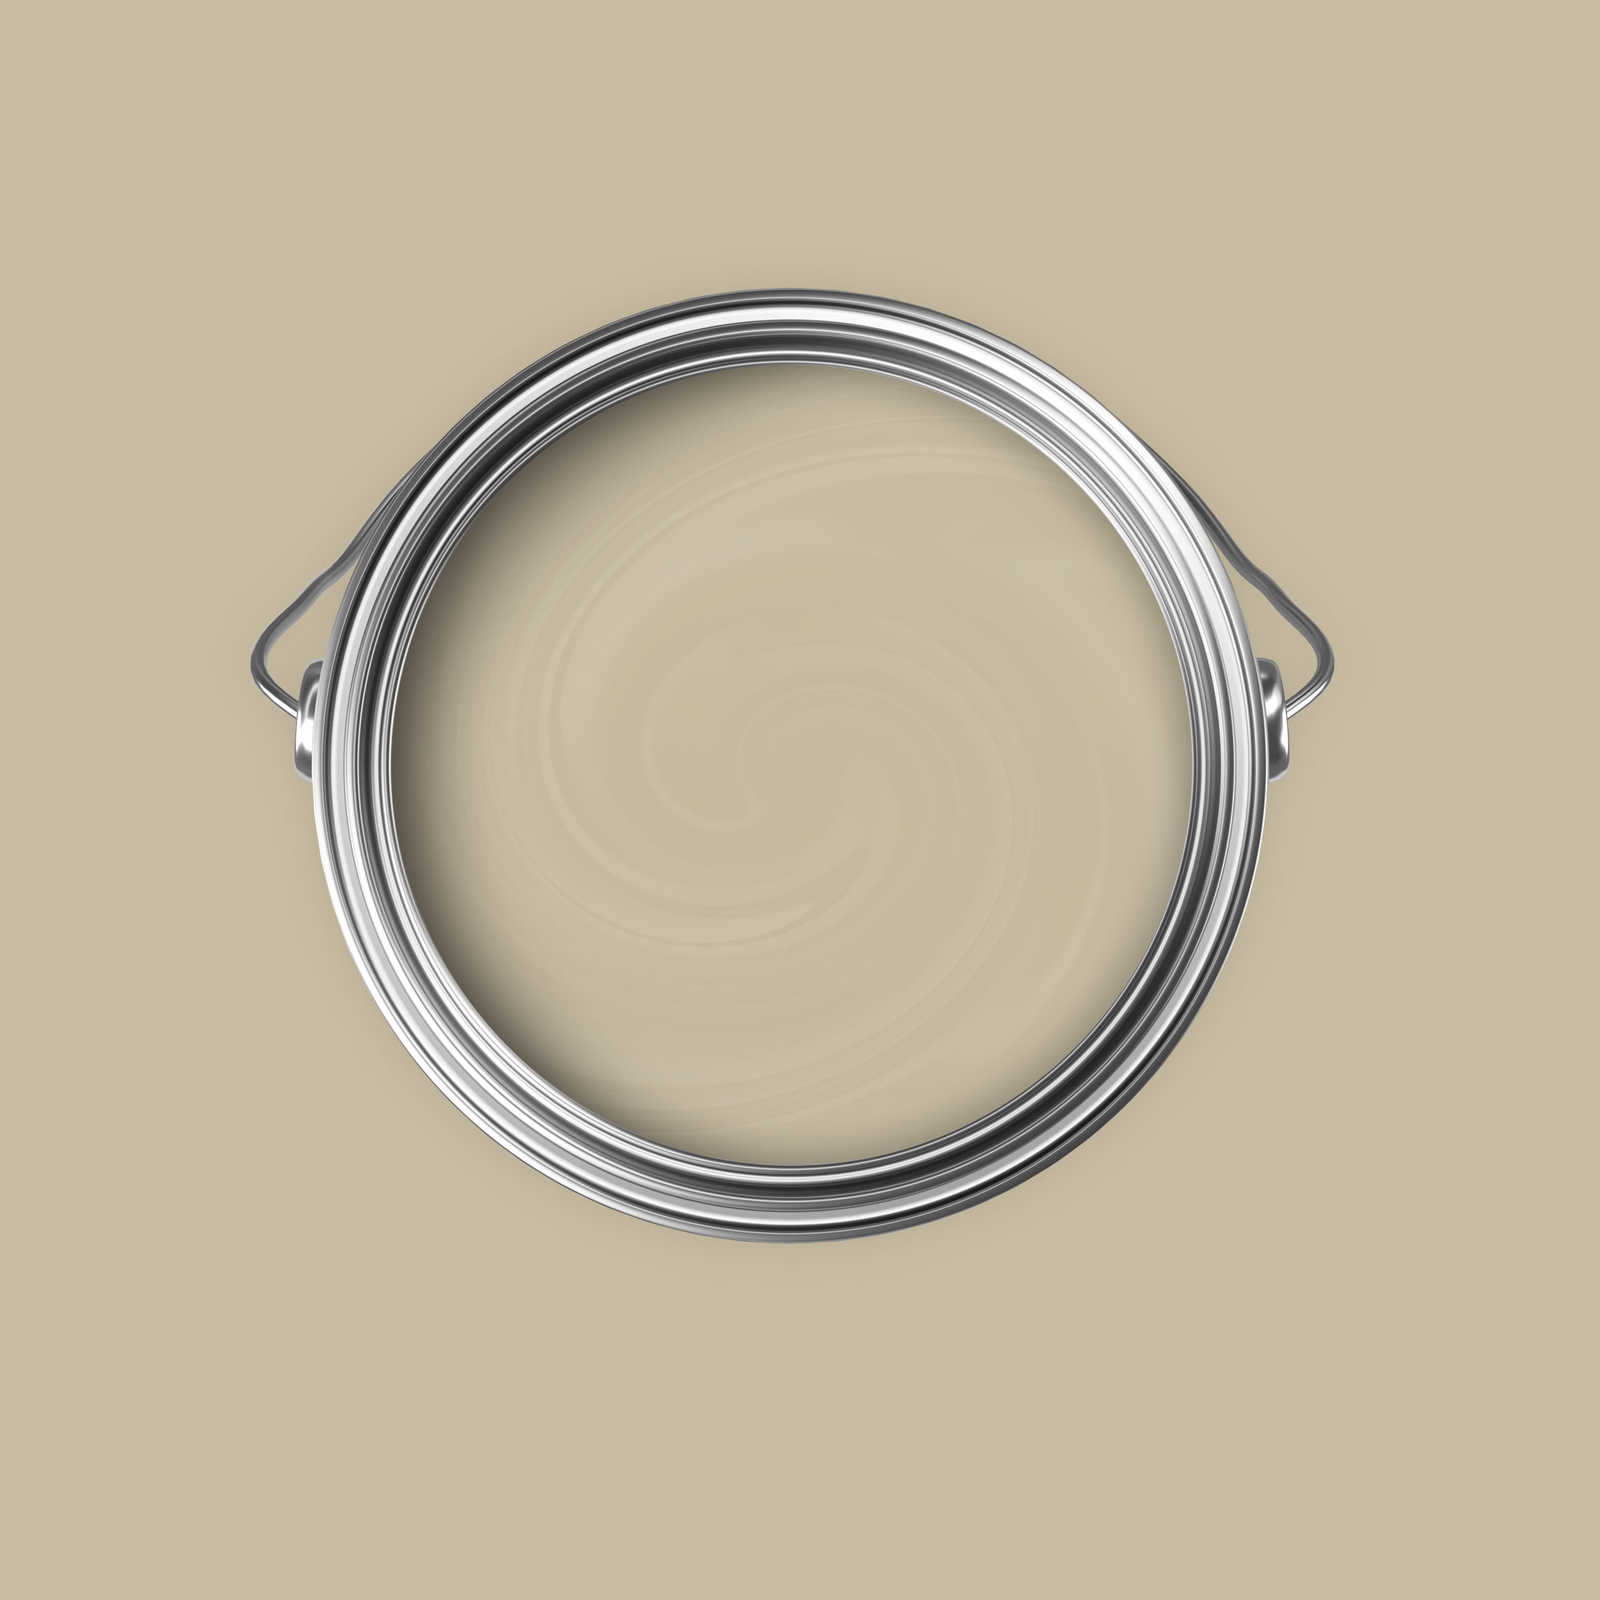             Premium Muurverf huiselijk licht beige »Lucky Lime« NW604 – 5 liter
        